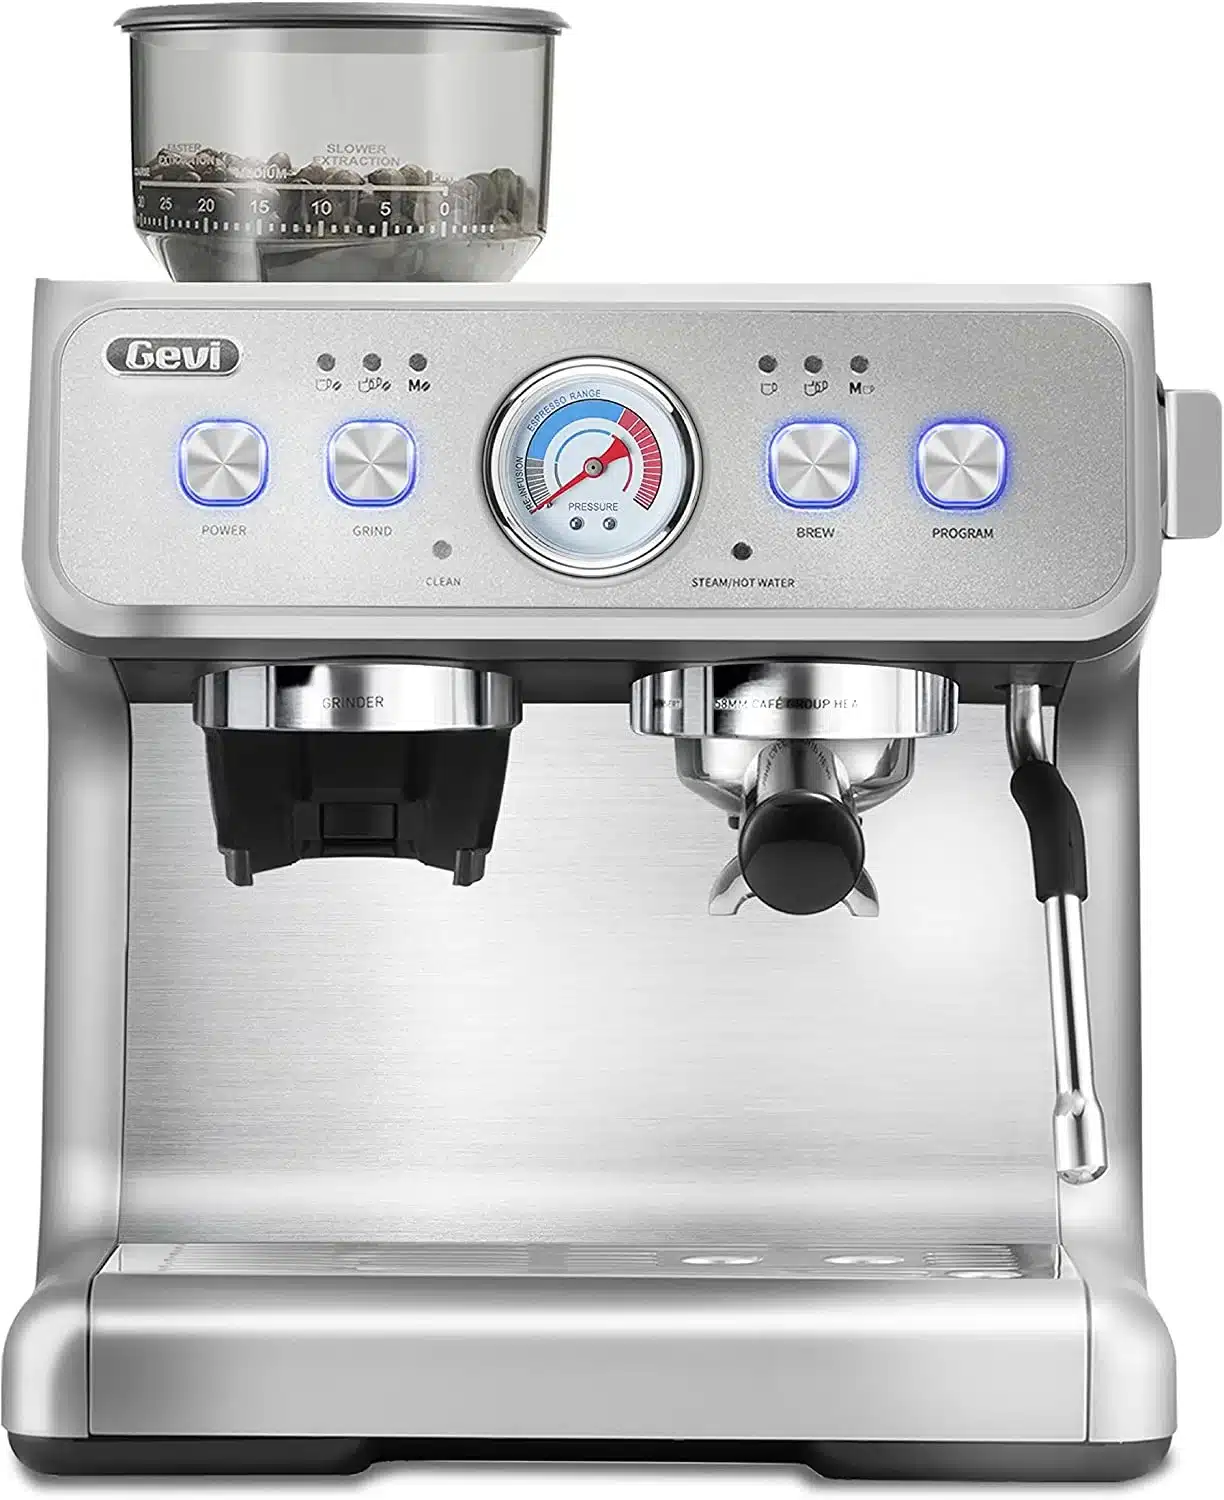 Gevi 20 Bar Semi Automatic Espresso Machine